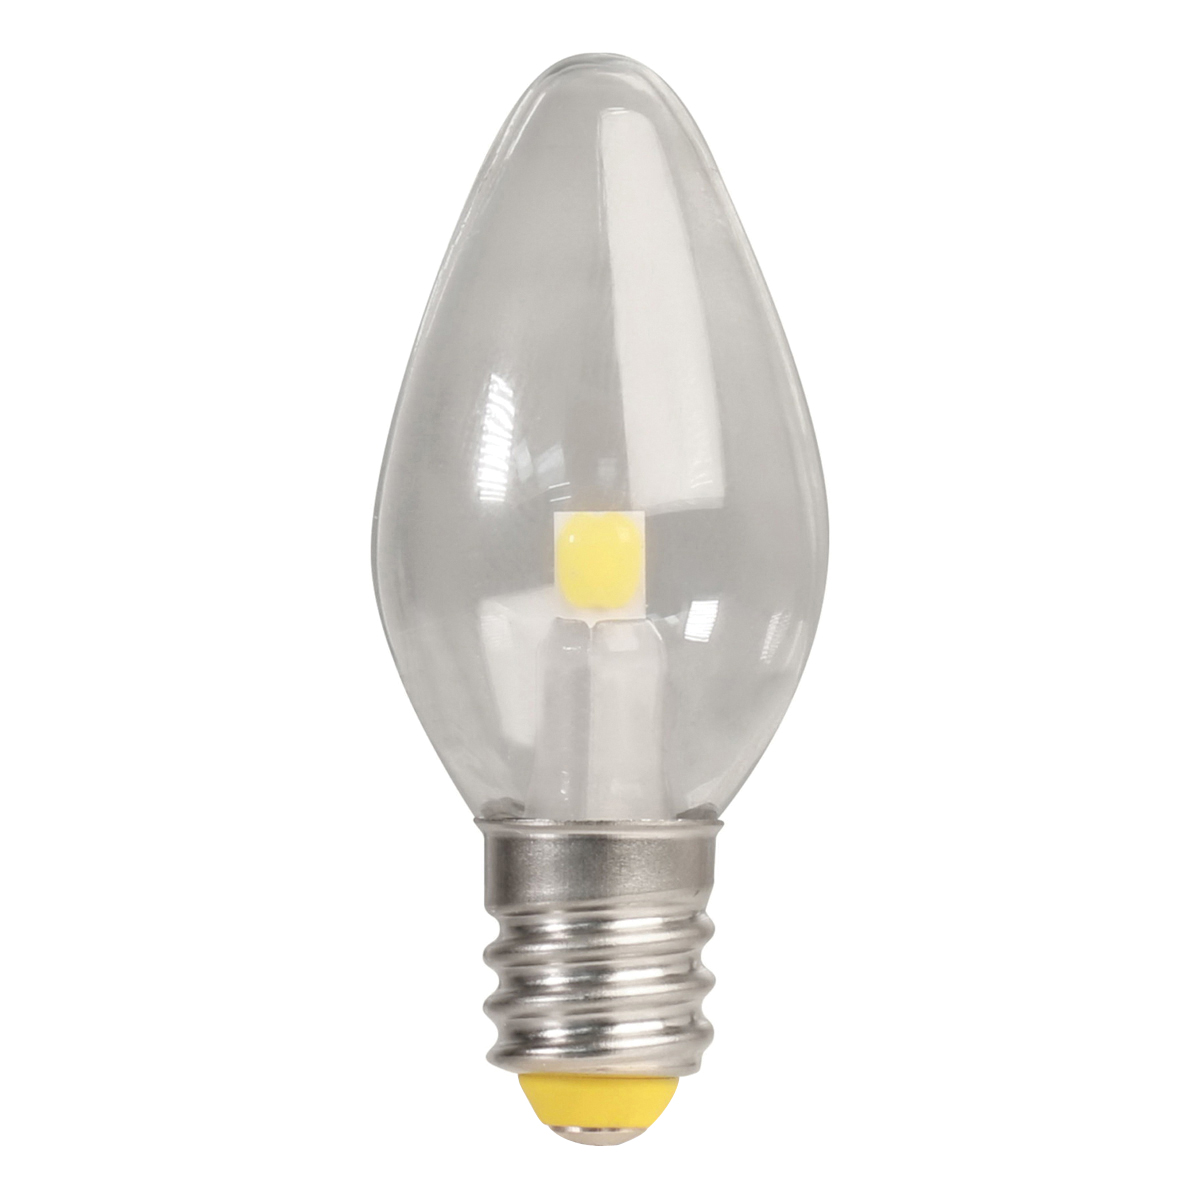 Feit Electric BP4C7/850/LED/4 LED Night Light Bulb, 0.35 W, E12 Candelabra Lamp Base, C7 Lamp, Daylight Light - 1